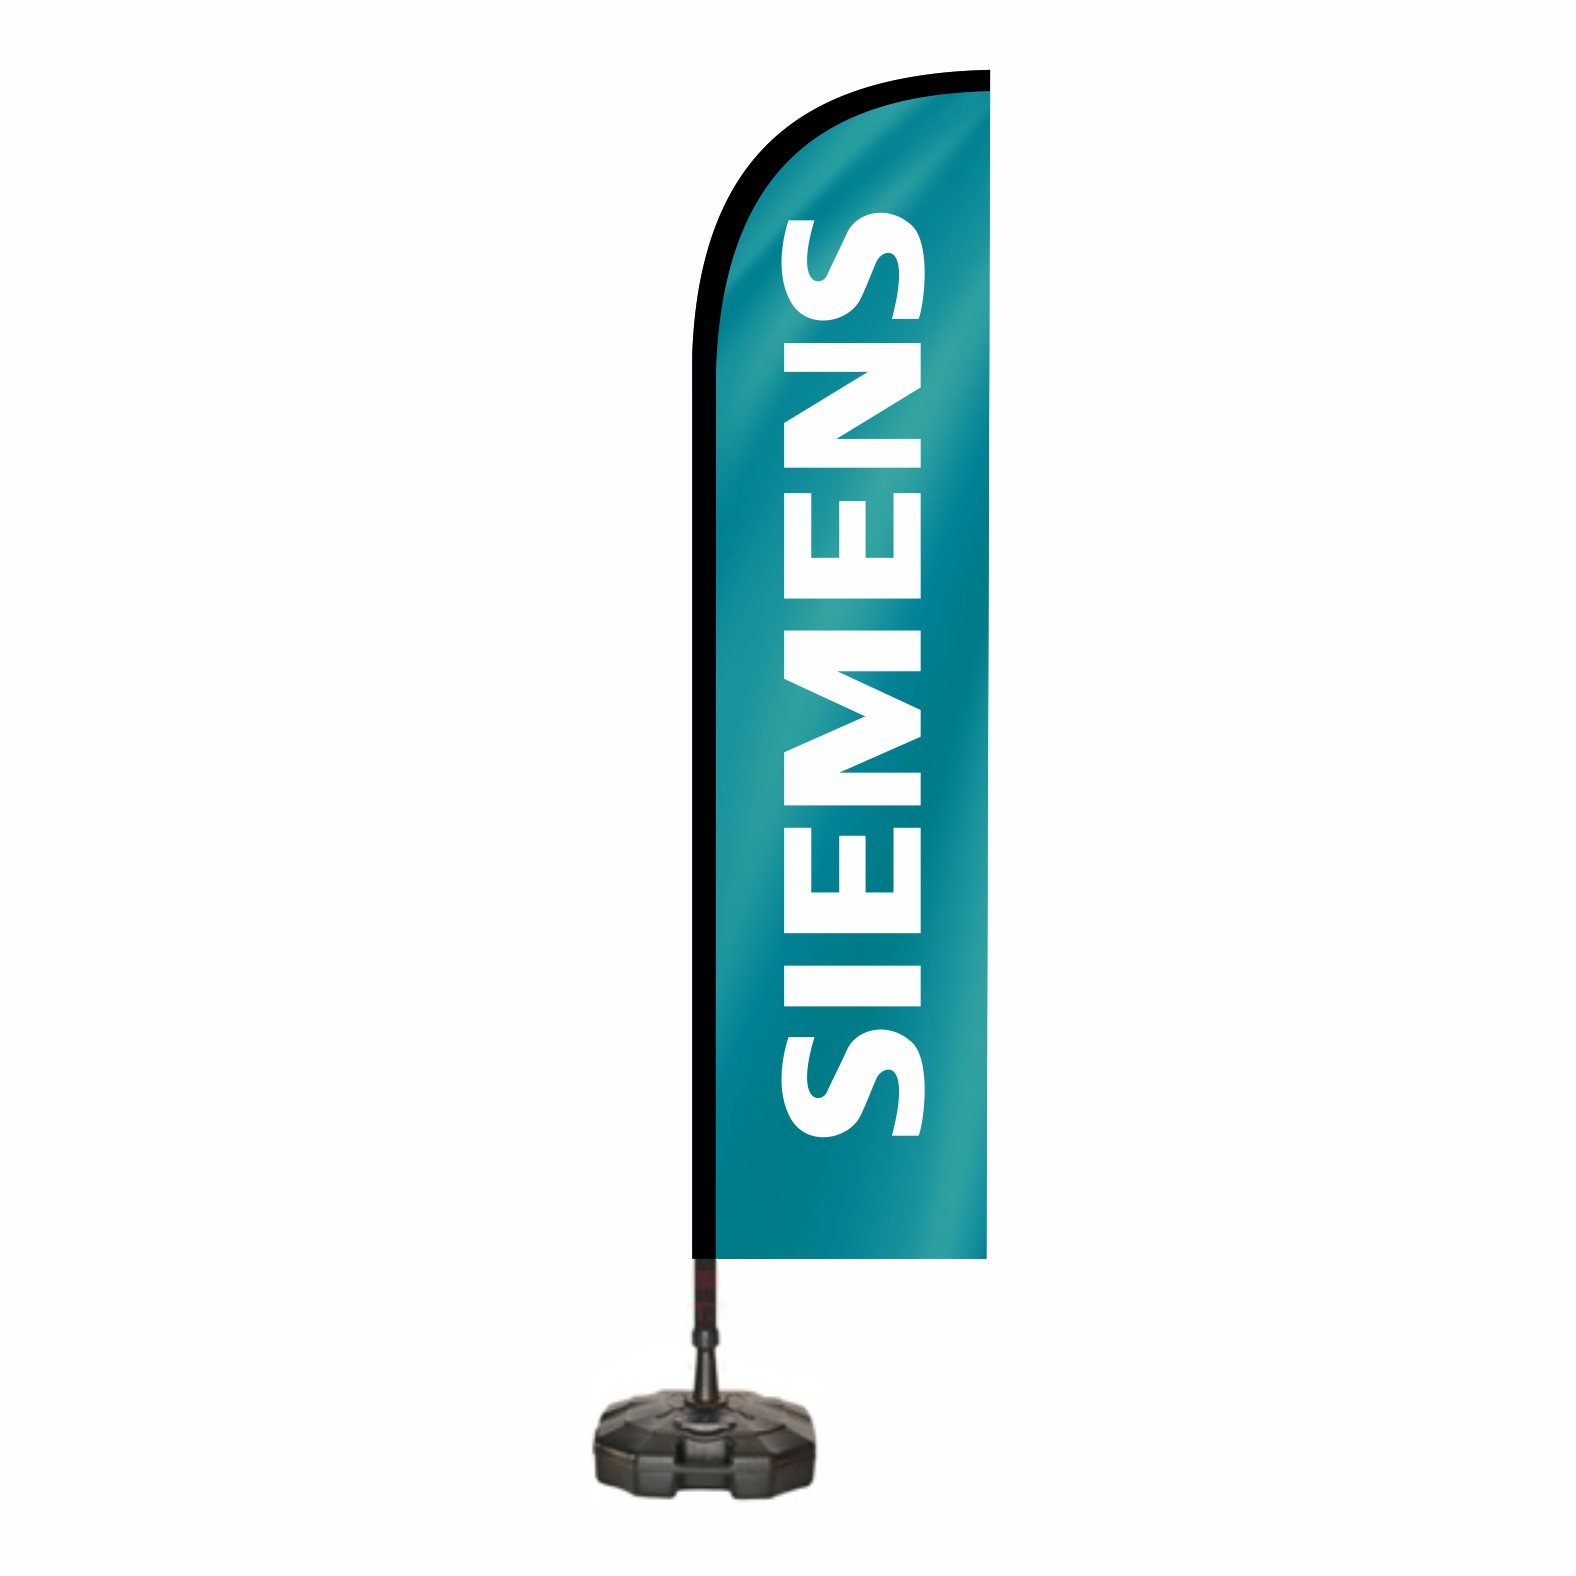 Siemens Yol Bayraklar